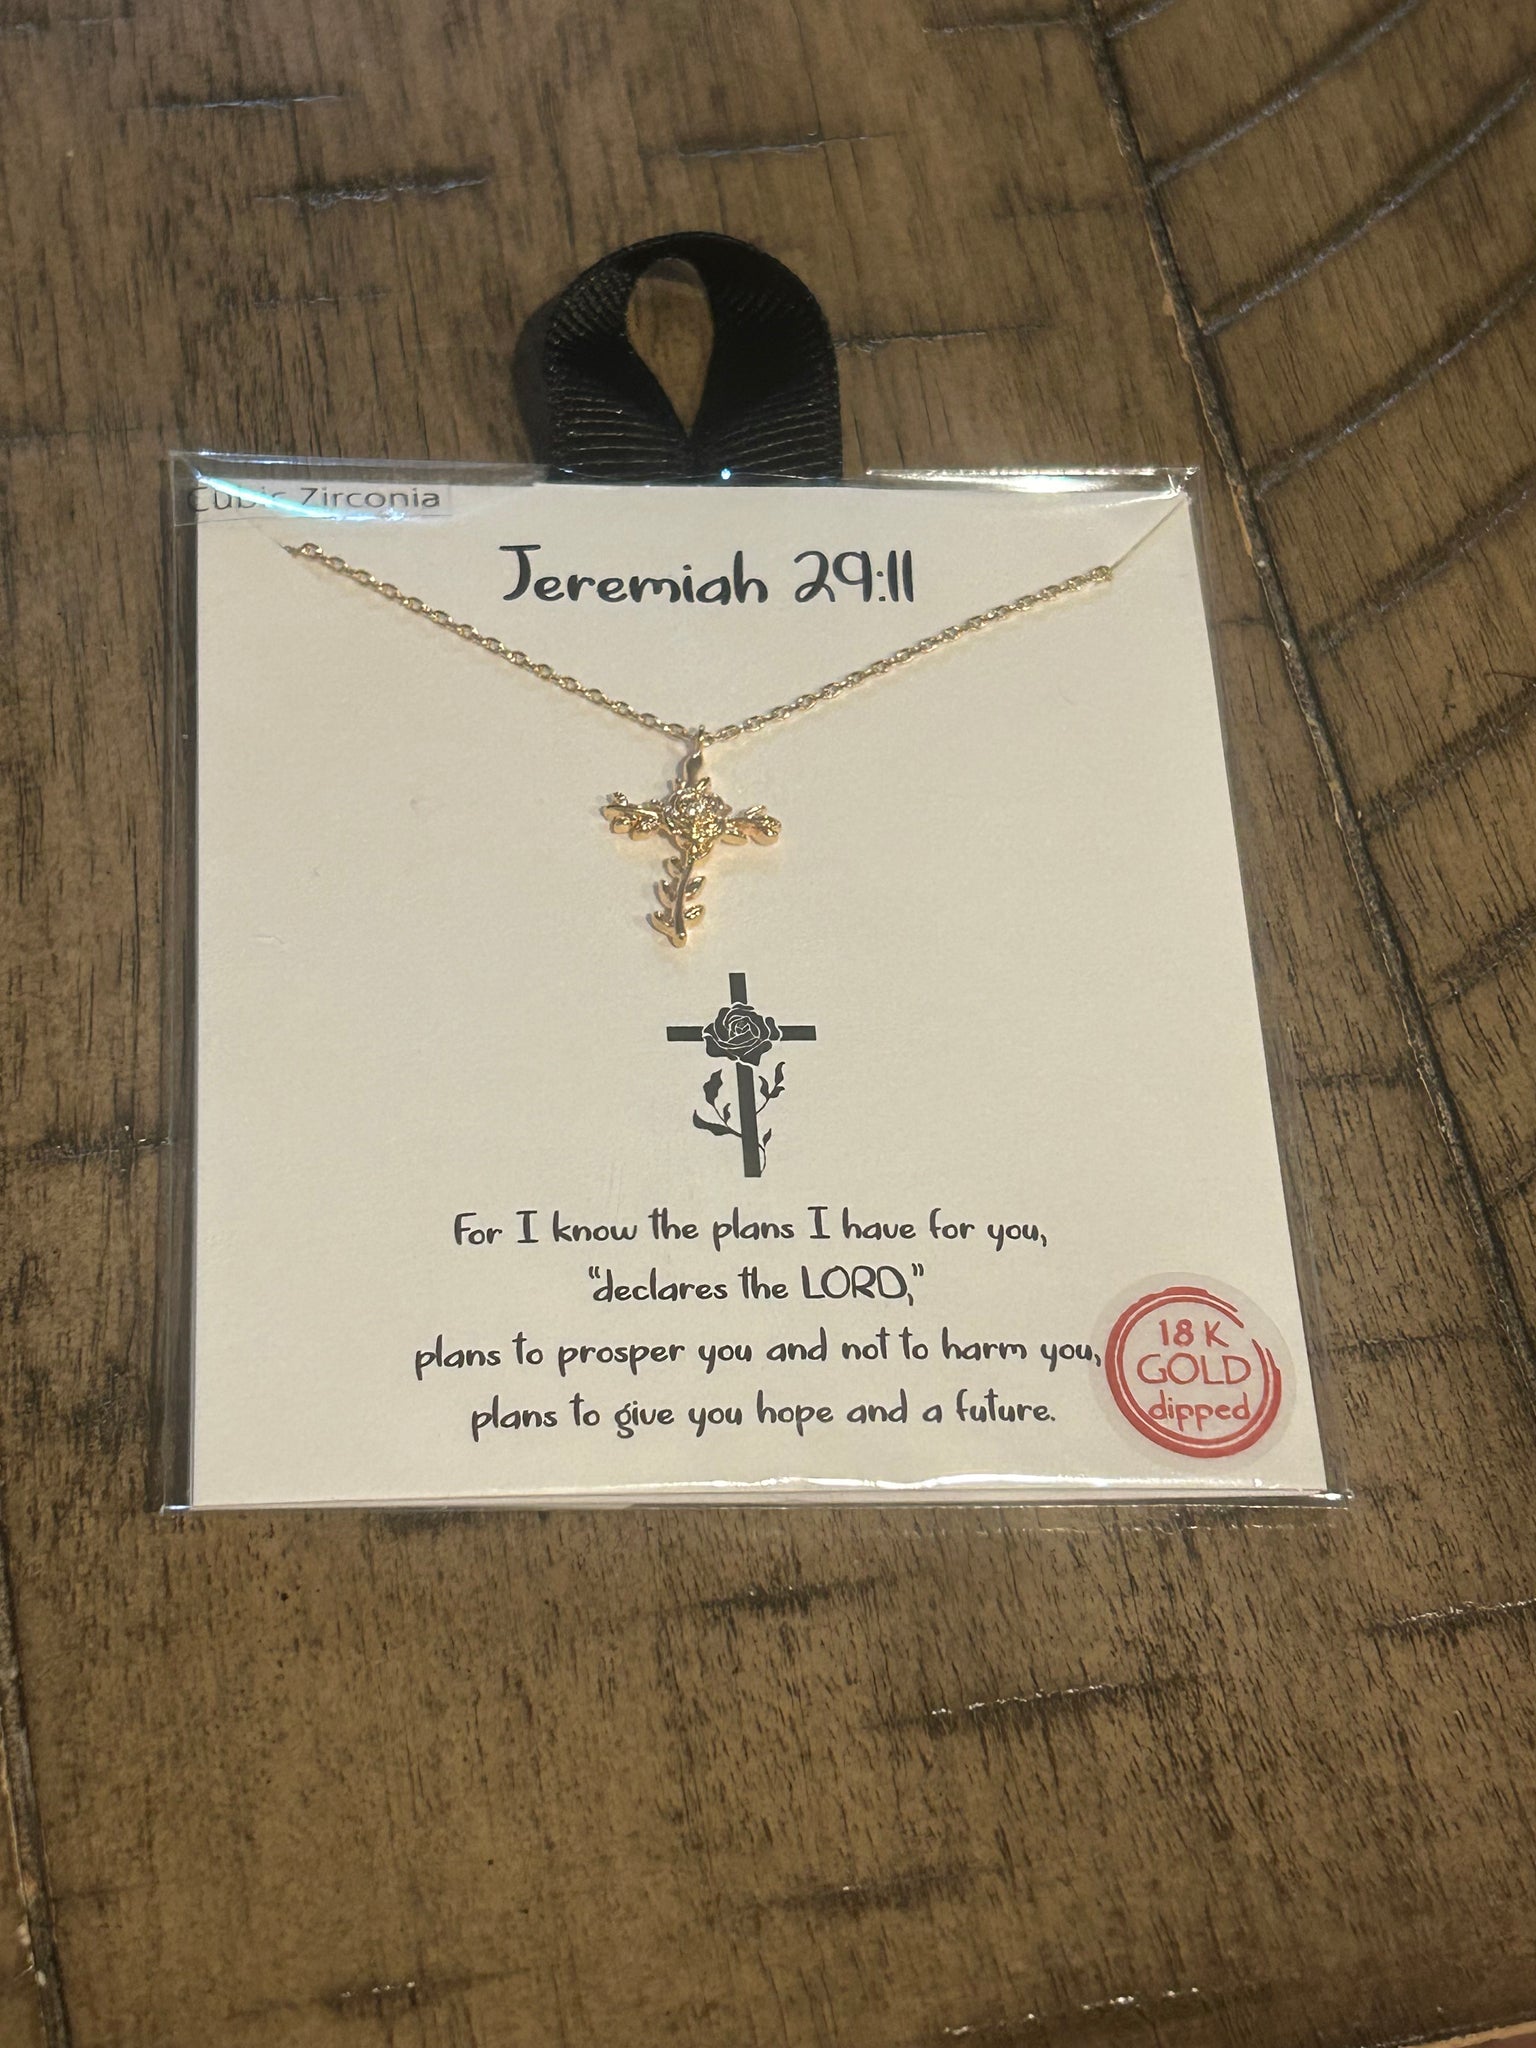 Jeremiah 29:11 necklace